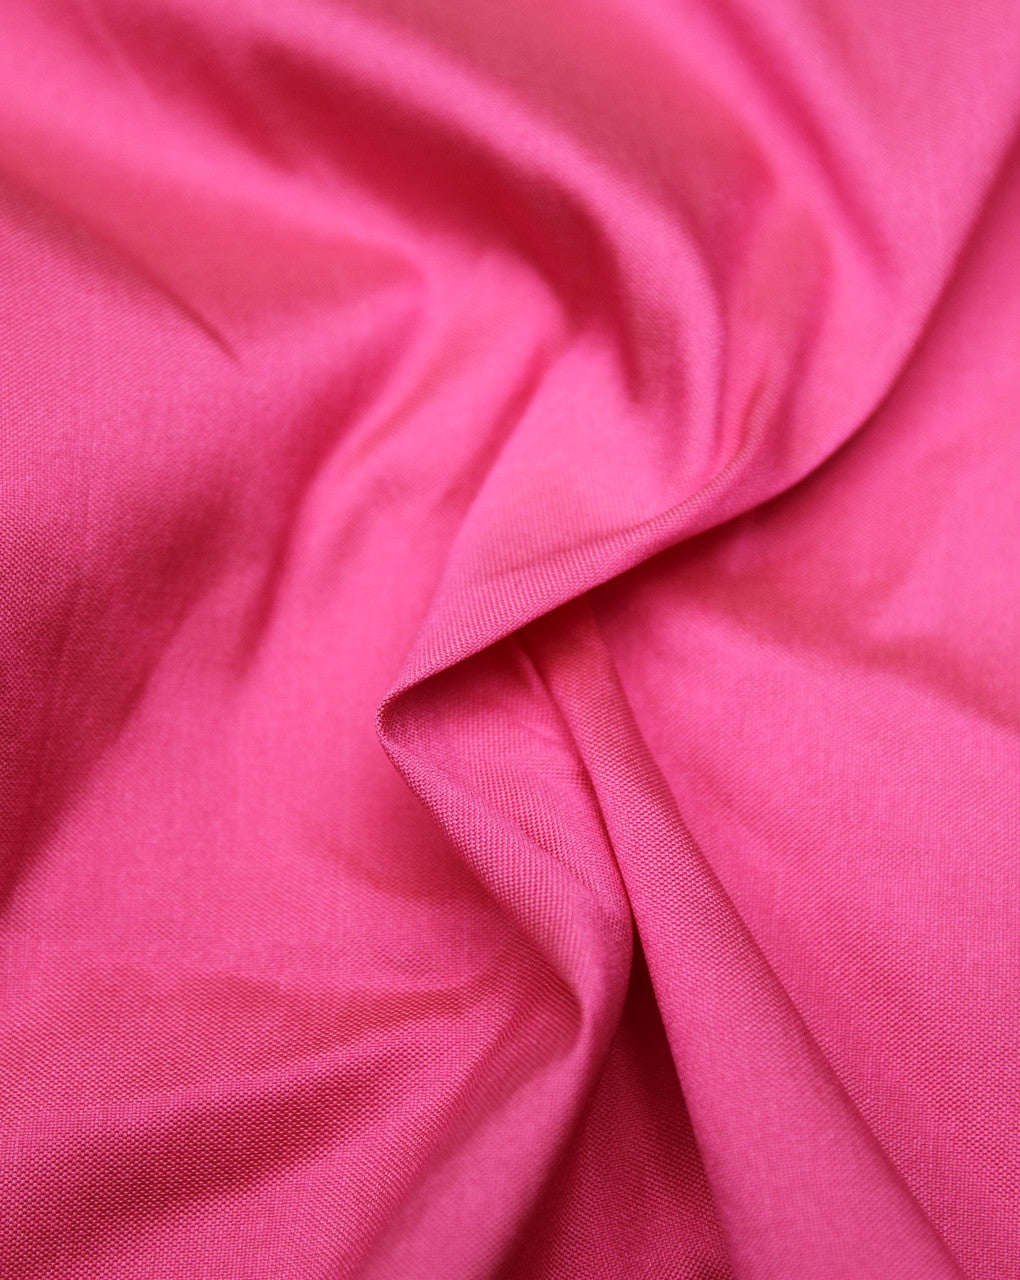 Plain Pink Polyester Taffeta Fabric